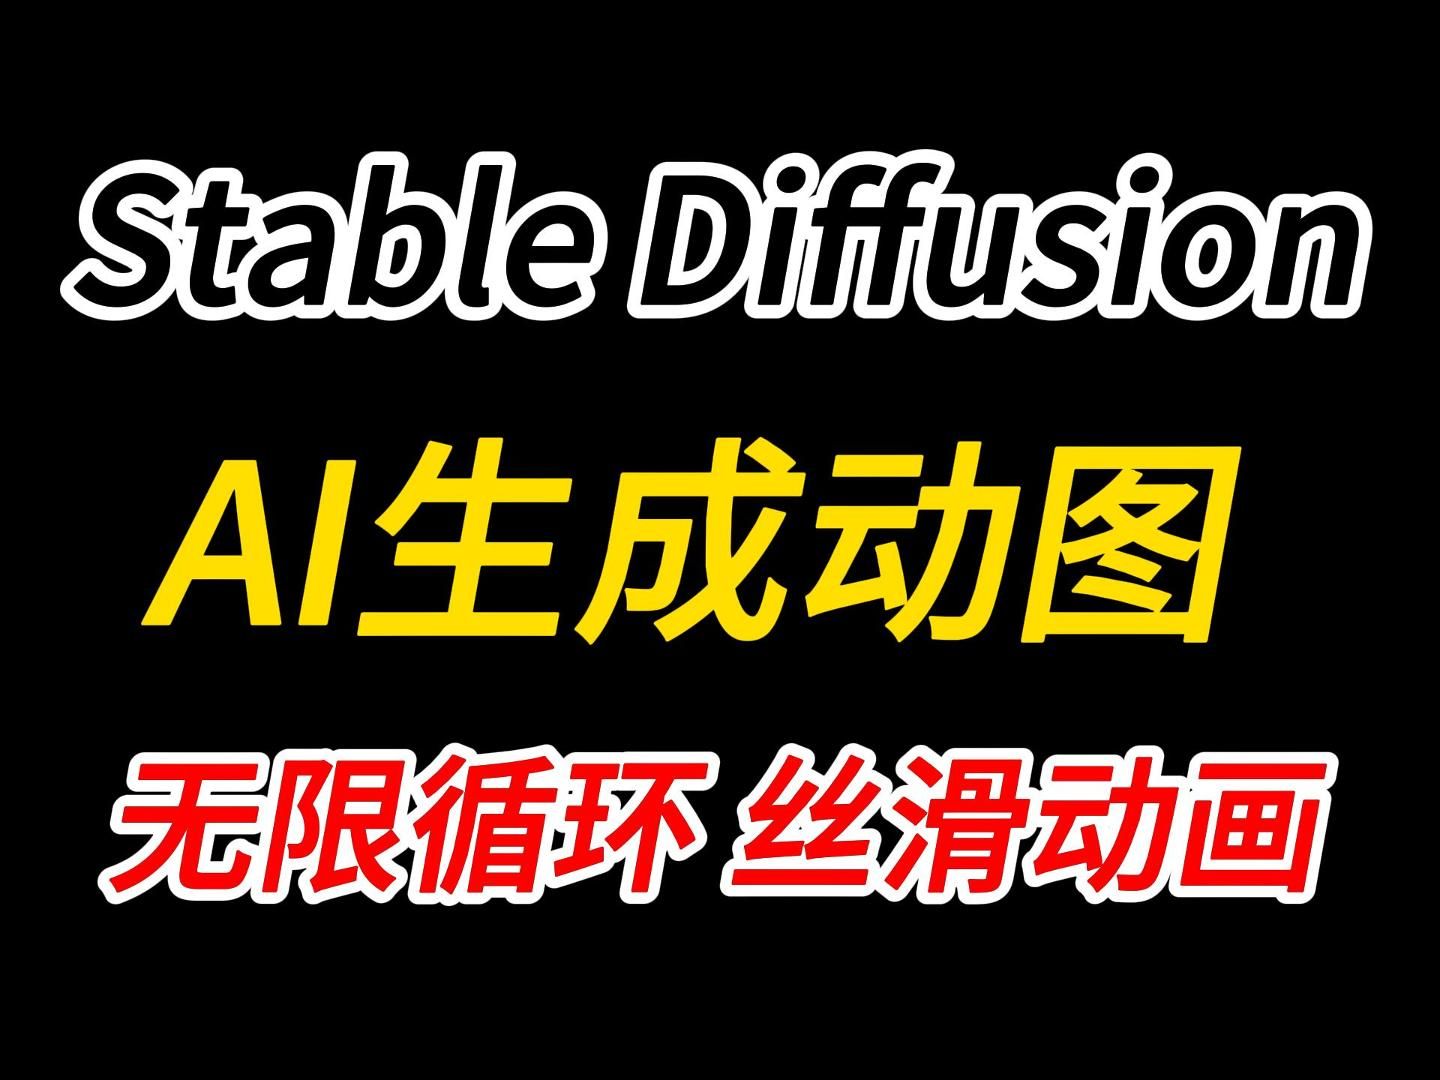 【Stable Diffusion】SD生成超稳定丝滑卡通动画（附安装包），一分钟就能搞定动图！新手入门stable diffusion教程